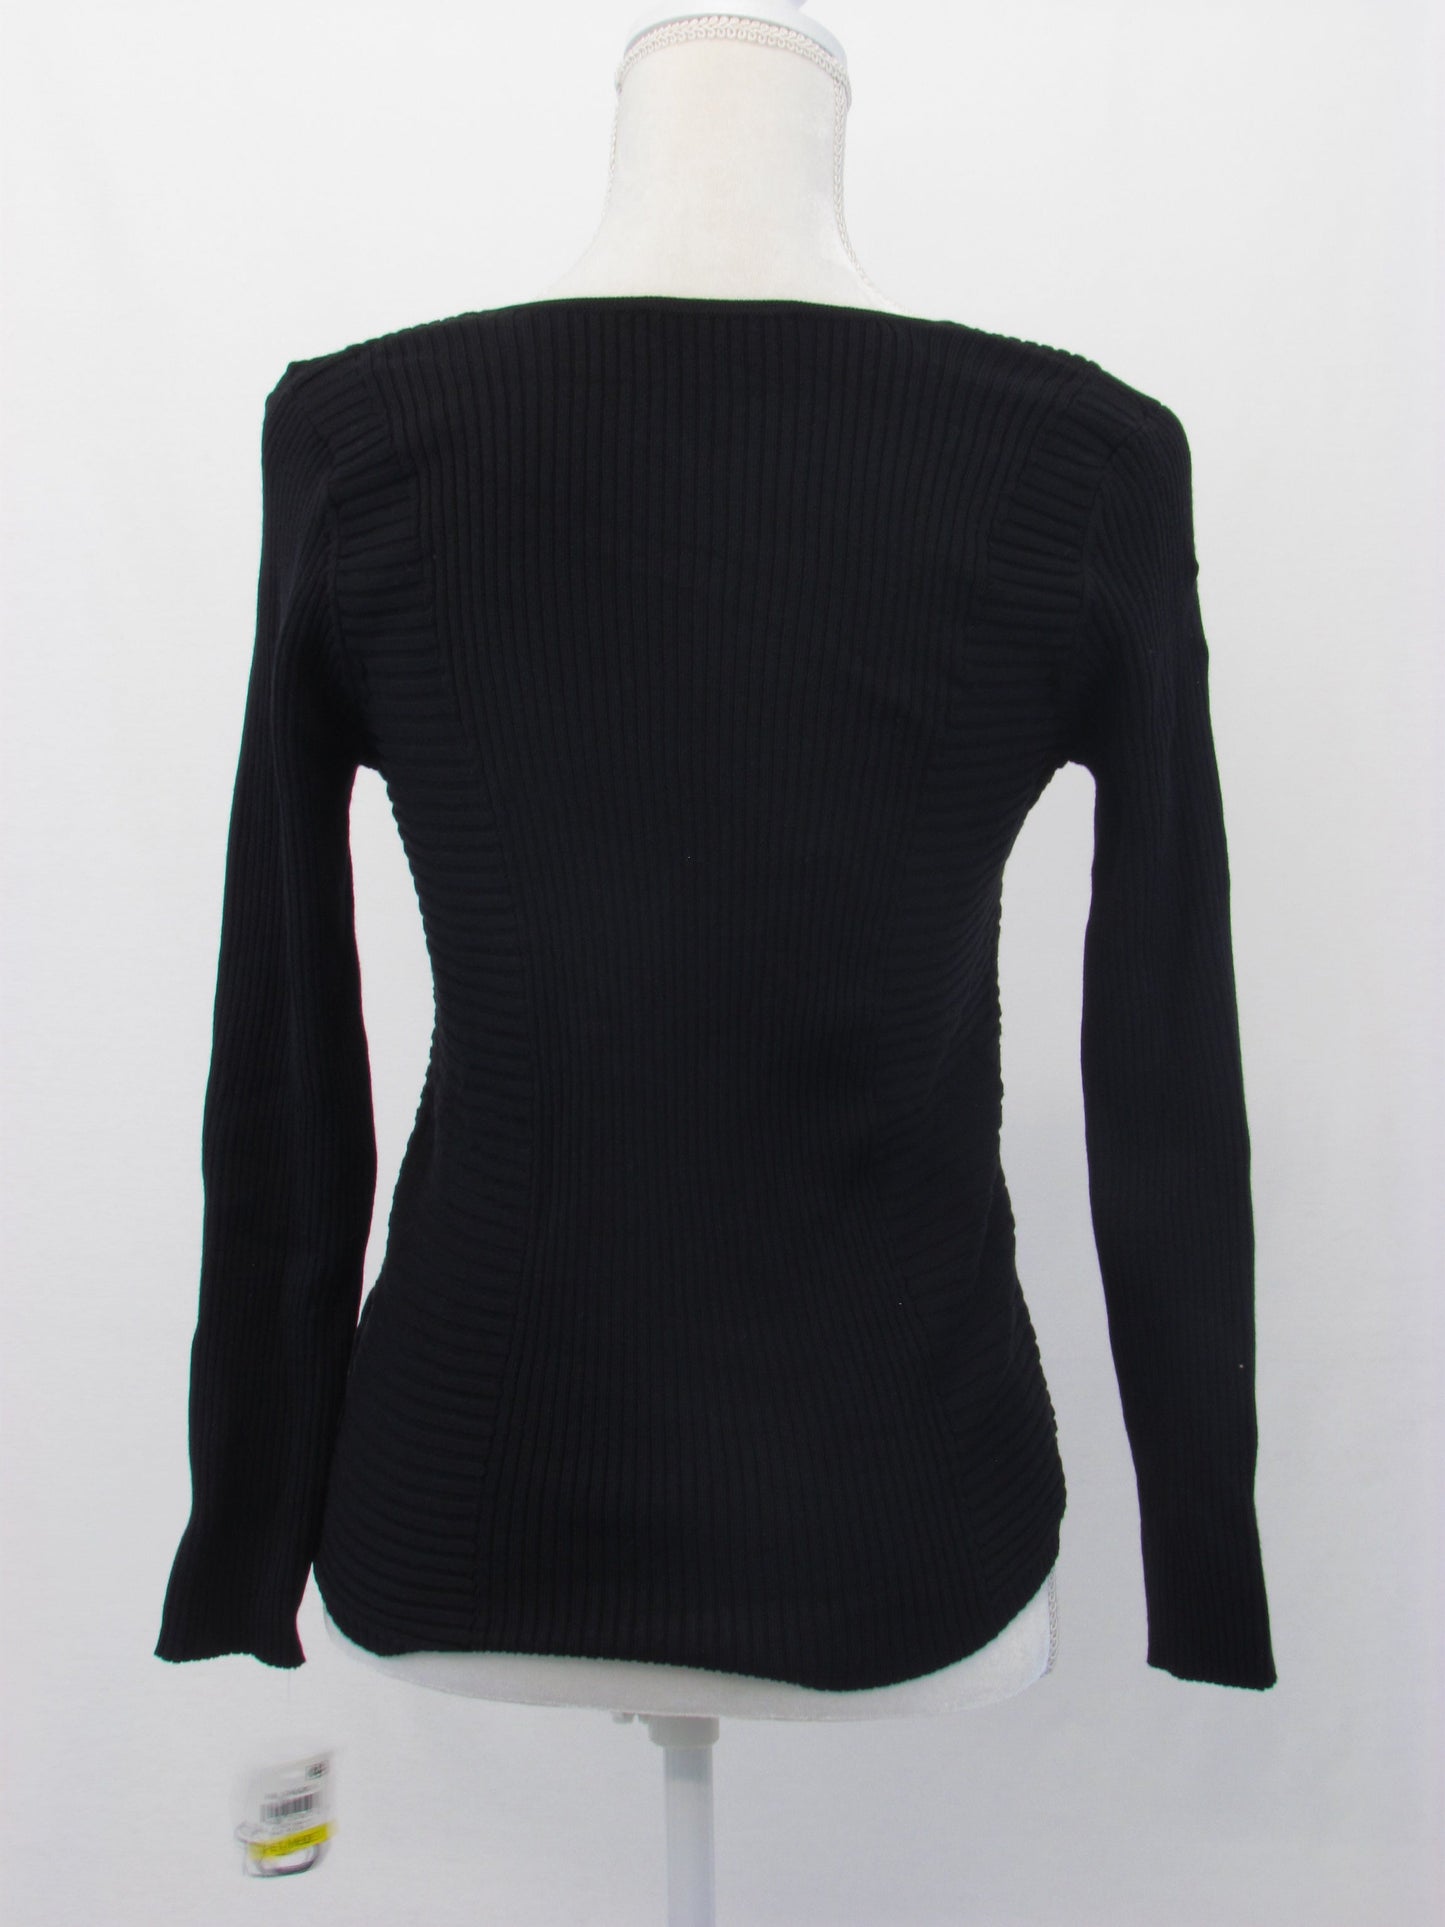 INC Sweater Top Petite Multi-Directional Ribbed Deep Black PM akrutinirali